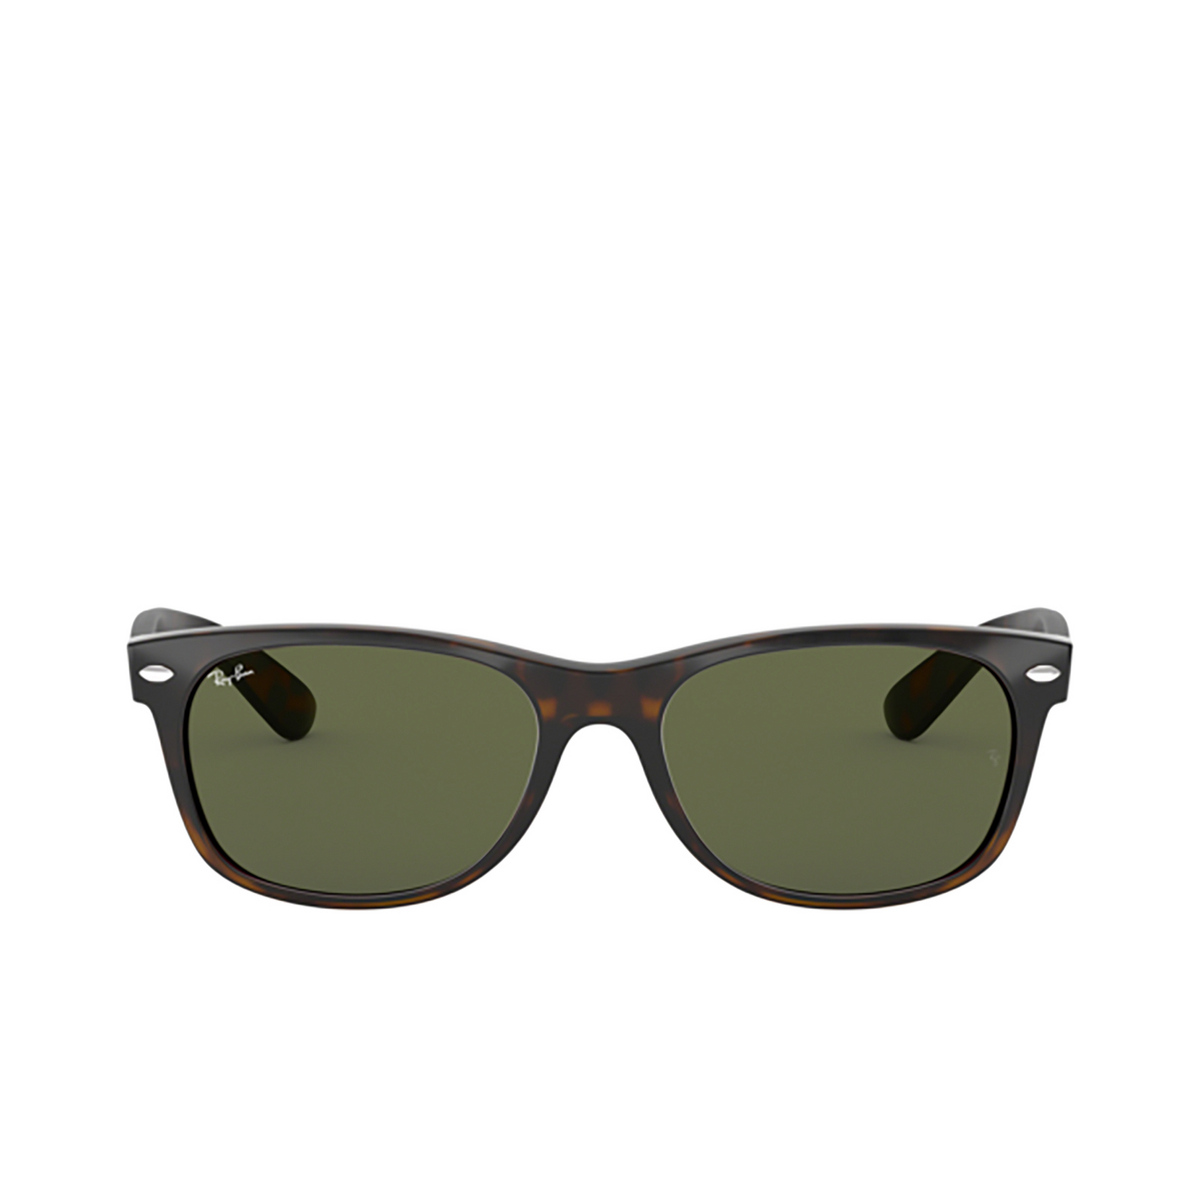 Ray-Ban NEW WAYFARER Sunglasses 902L TORTOISE - front view